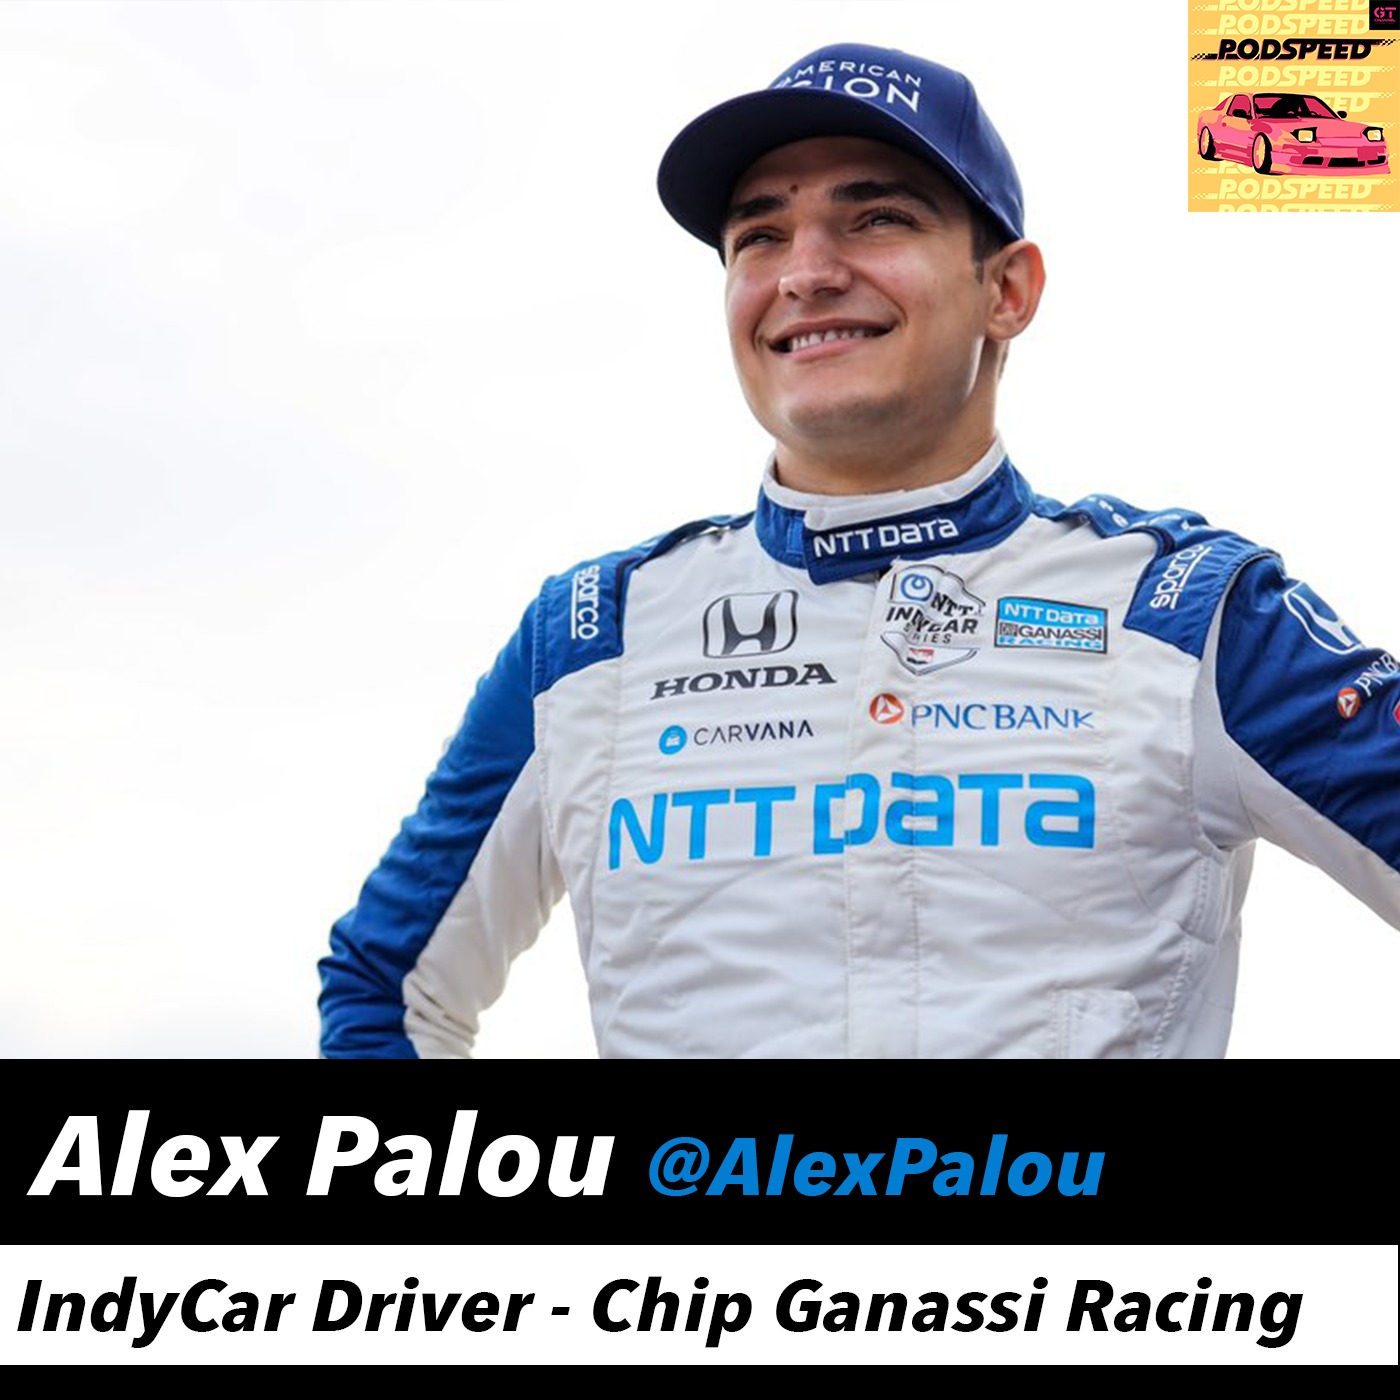 IndyCar Driver Alex Palou “Natural Talent” - Podspeed #47